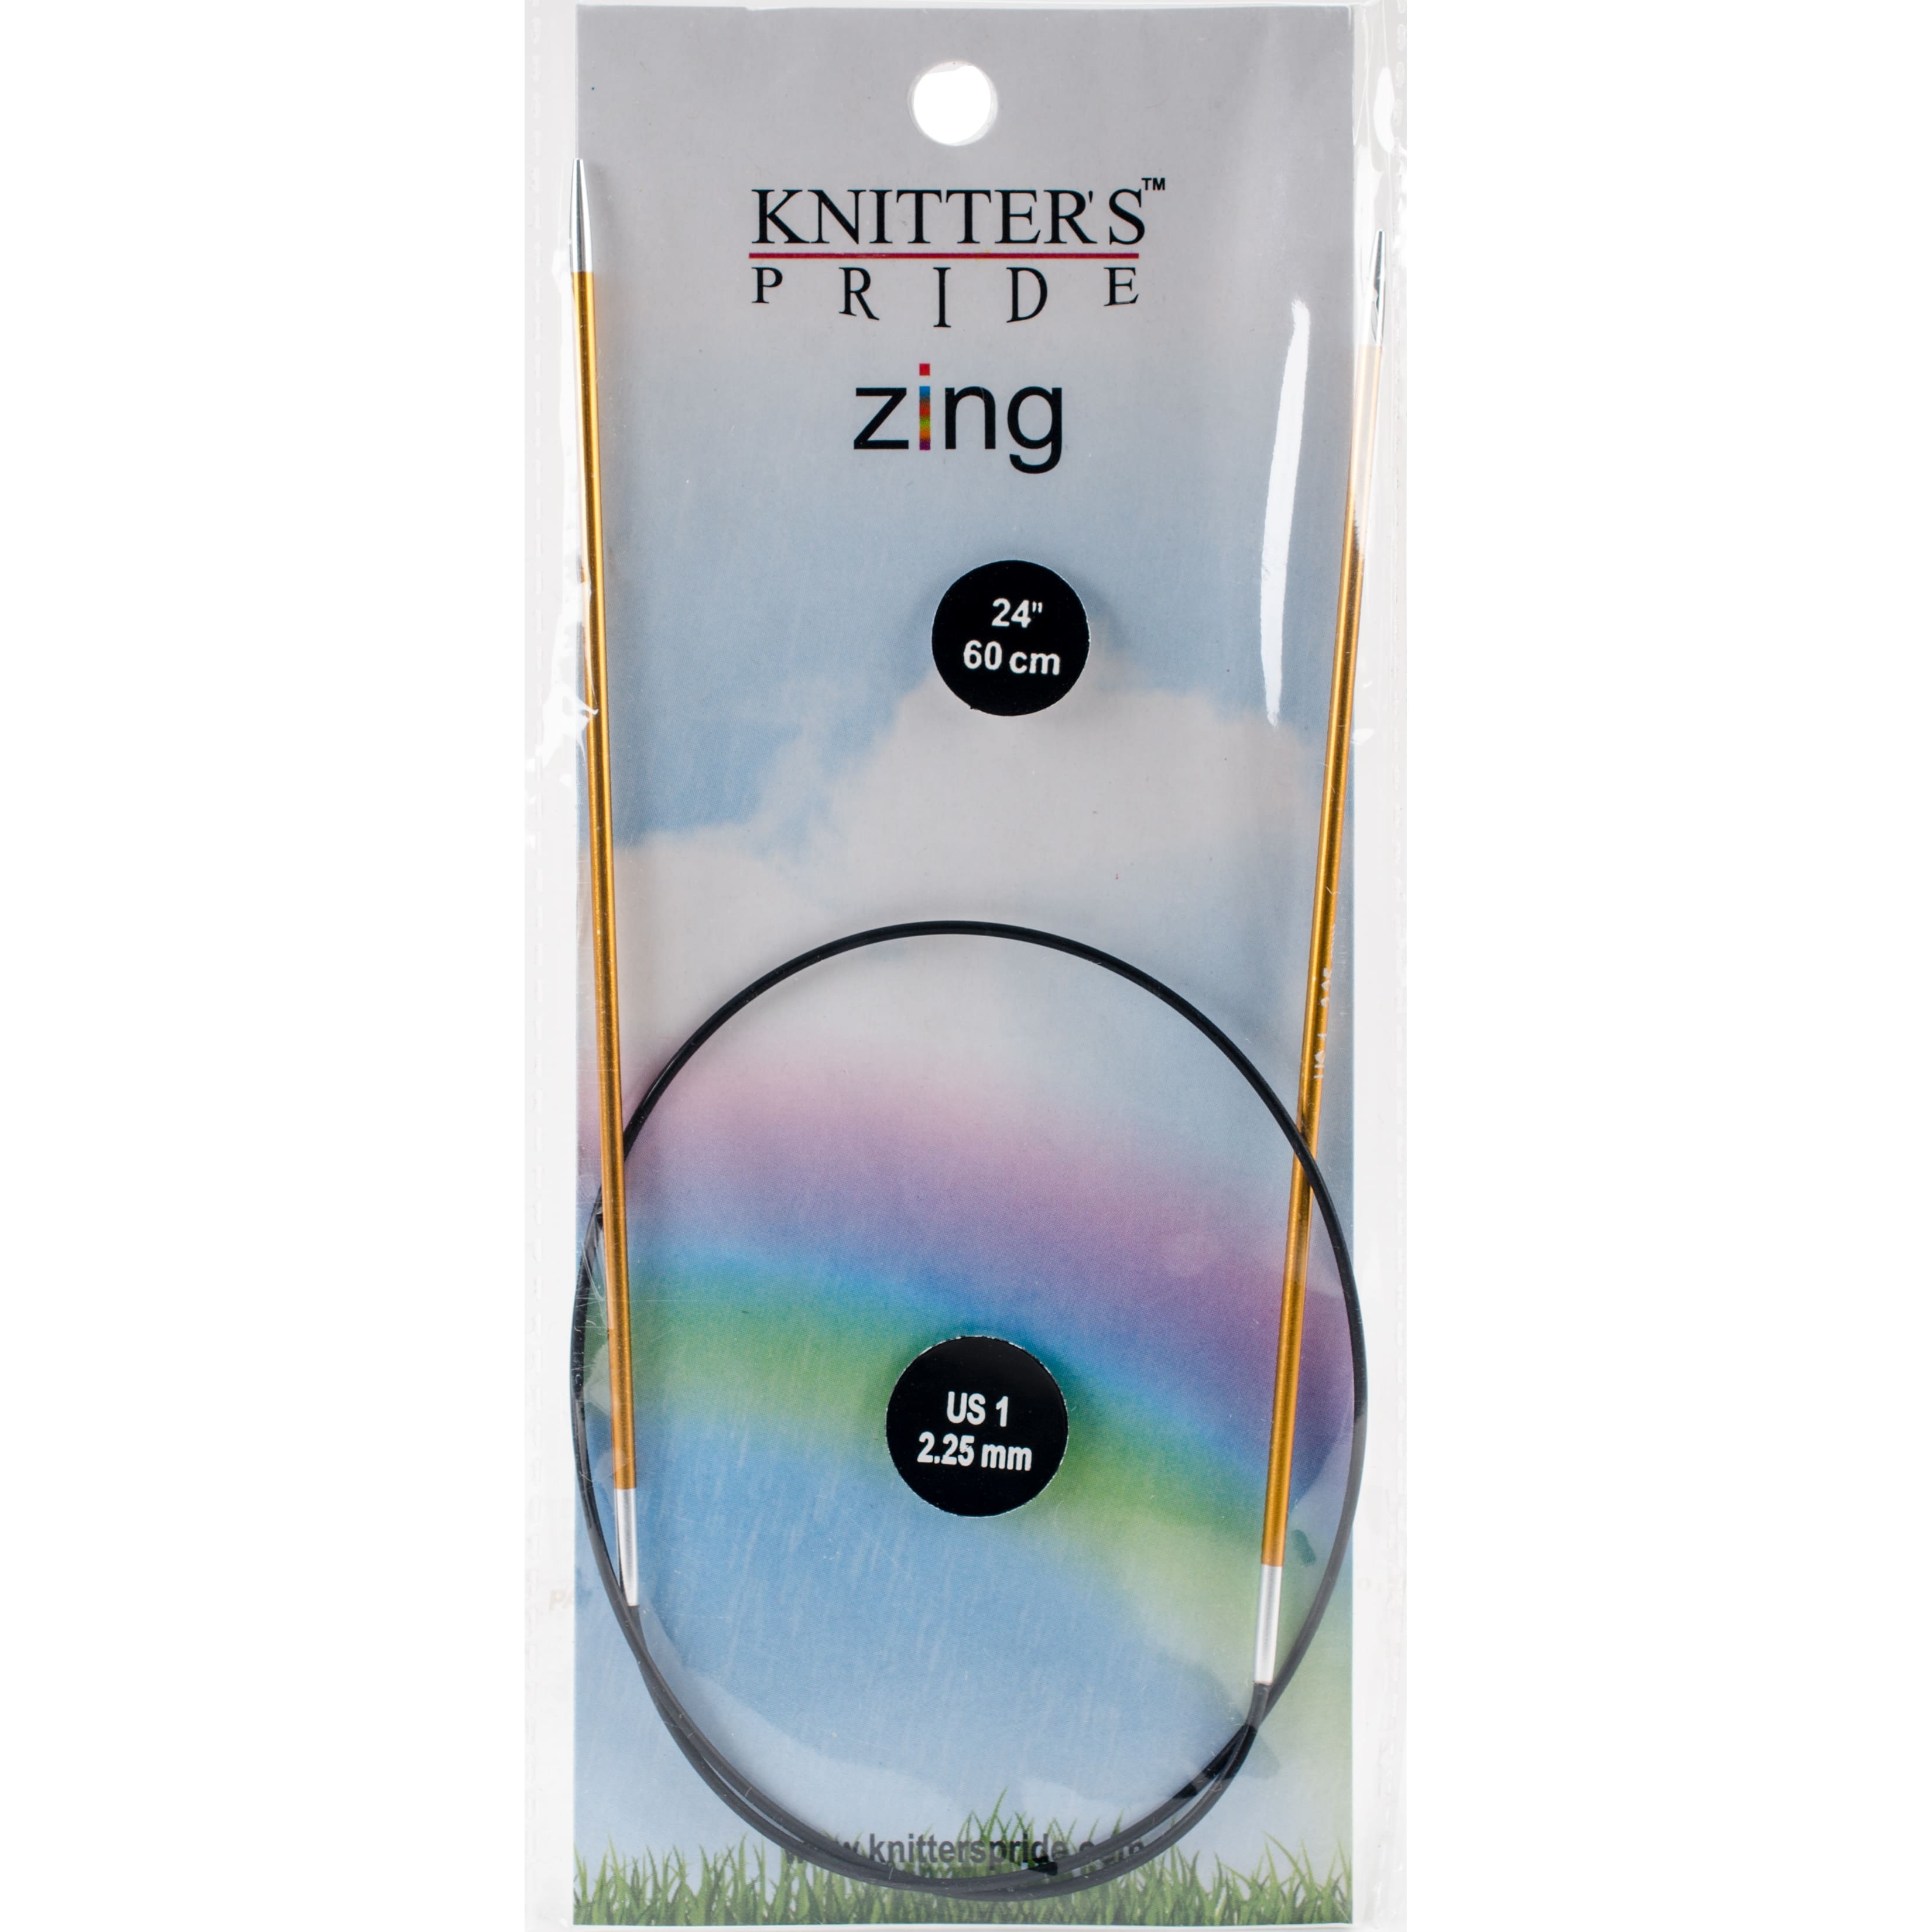 Knitter's Pride Zing Circular Knitting Needles